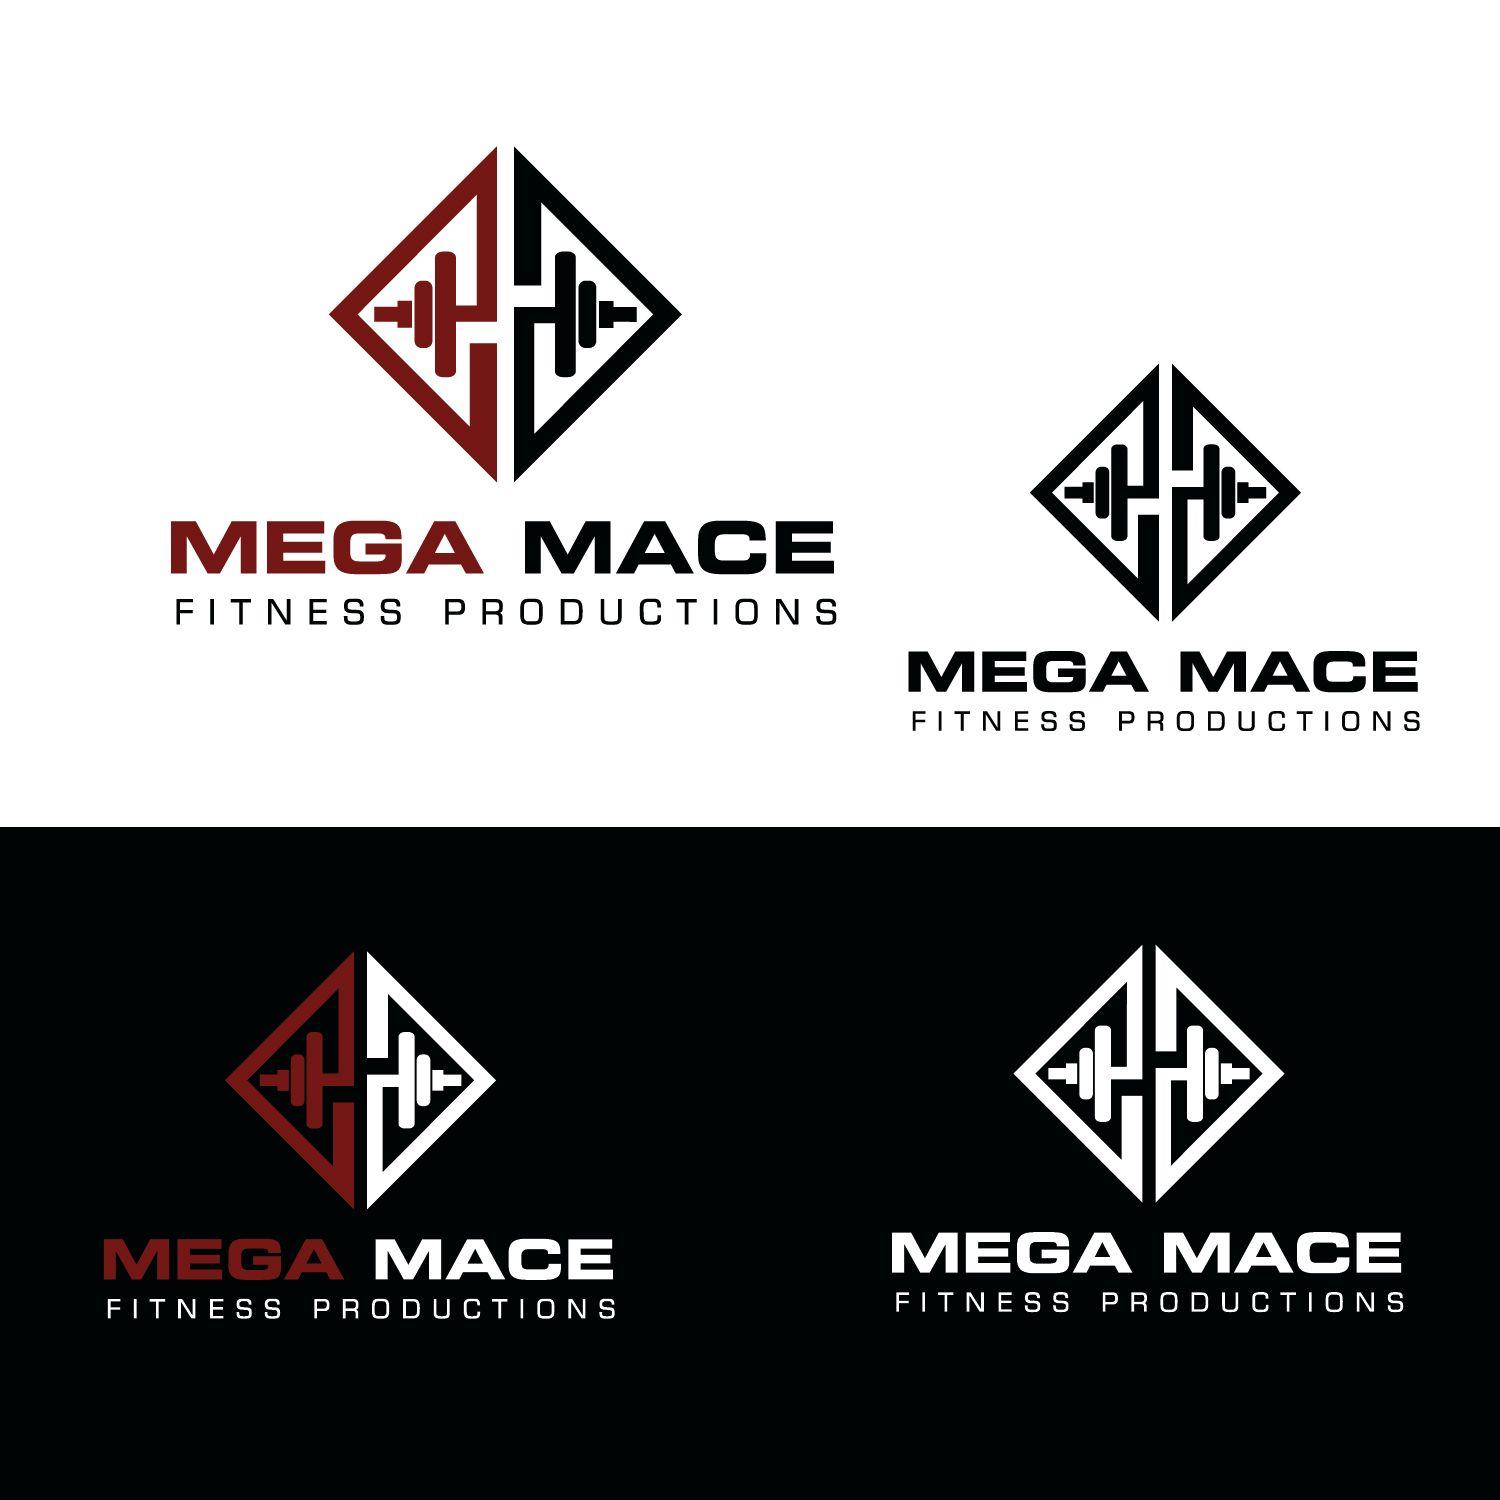 Mace Logo - Professional, Serious, Entertainment Industry Logo Design for Mega